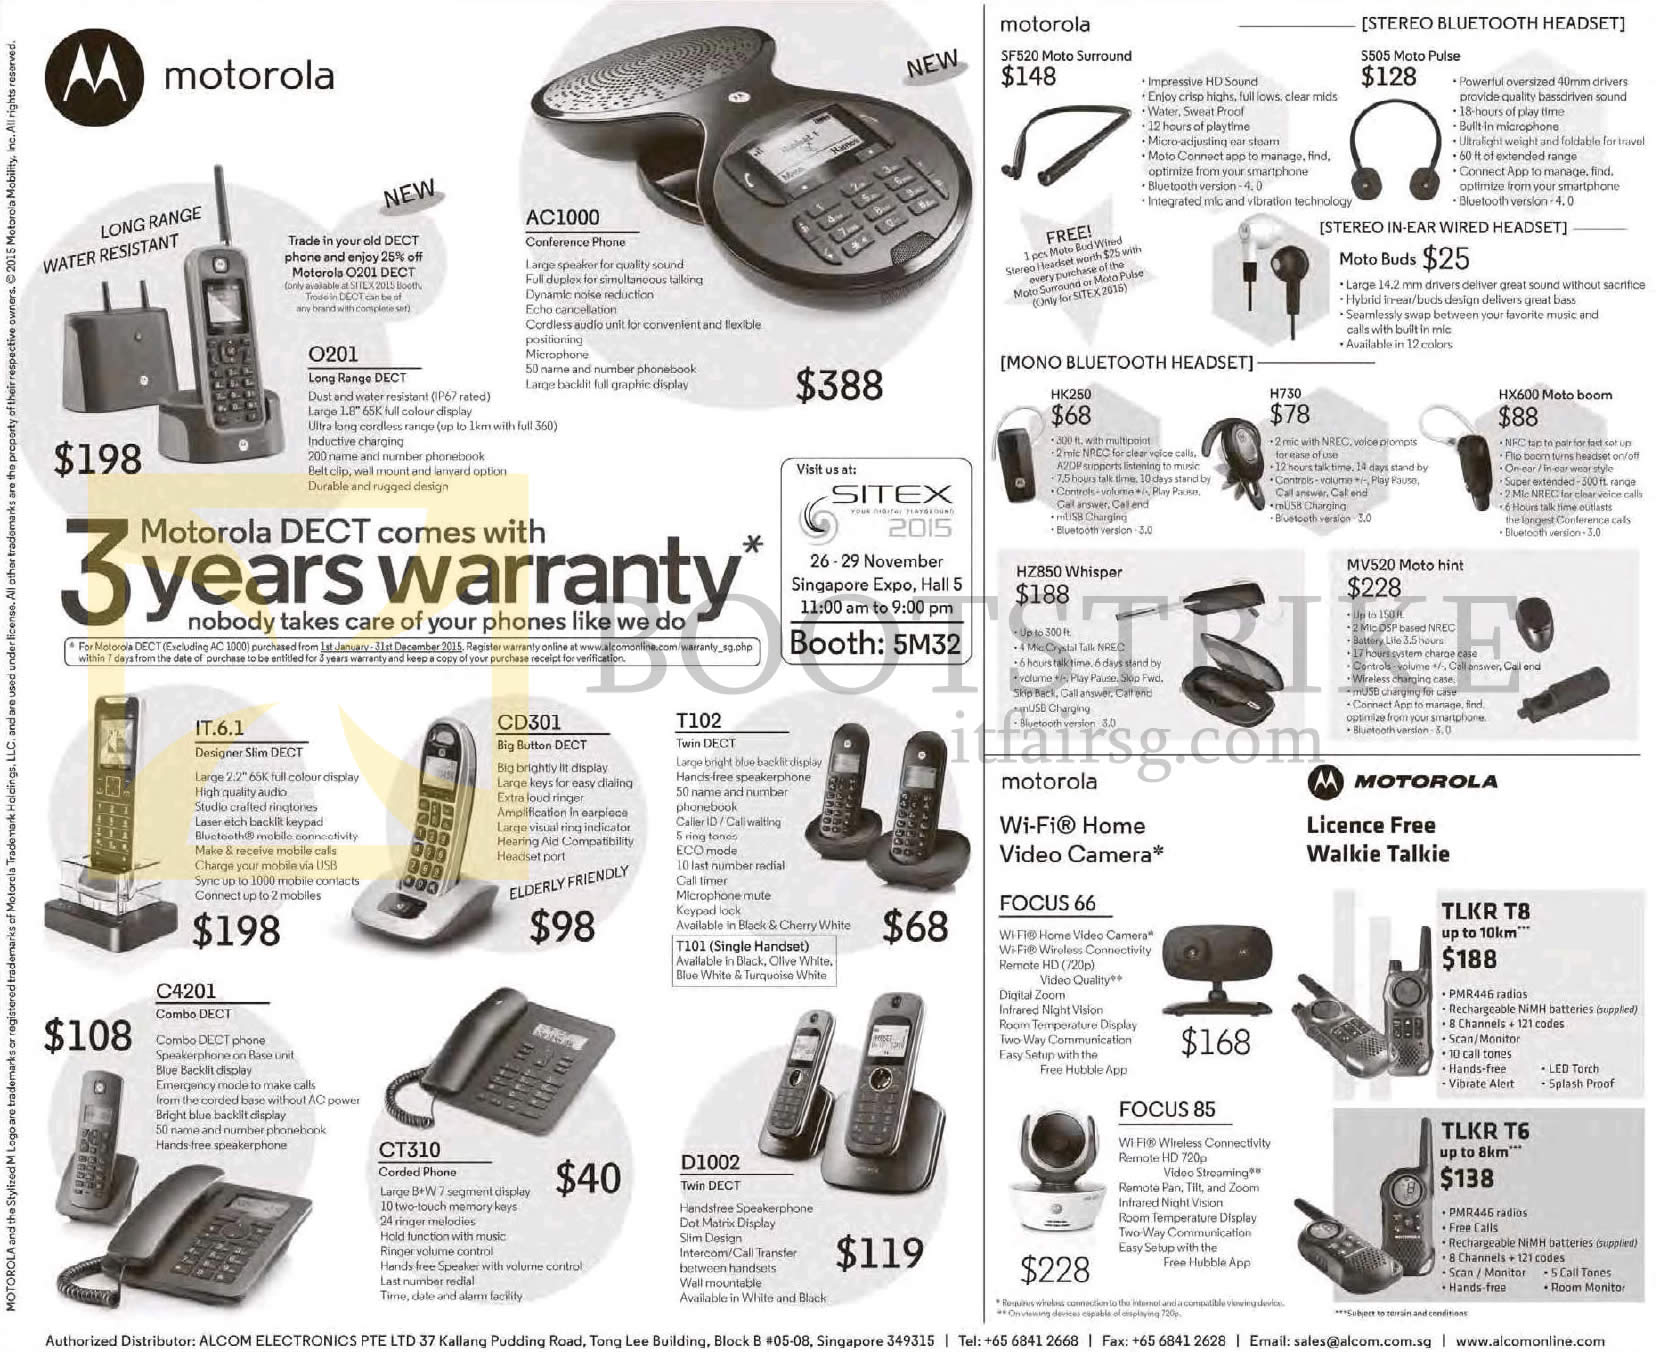 SITEX 2015 price list image brochure of Alcom Motorola, Dect Phones, O201, AC1000, IT.6.1, CD301, T102, C4201, CT310, D1002, Headset, SF520, S505, HK250, H730, HX600, HZ850, MV520, Walkie Talkie, IPCam, Focus 66, 85